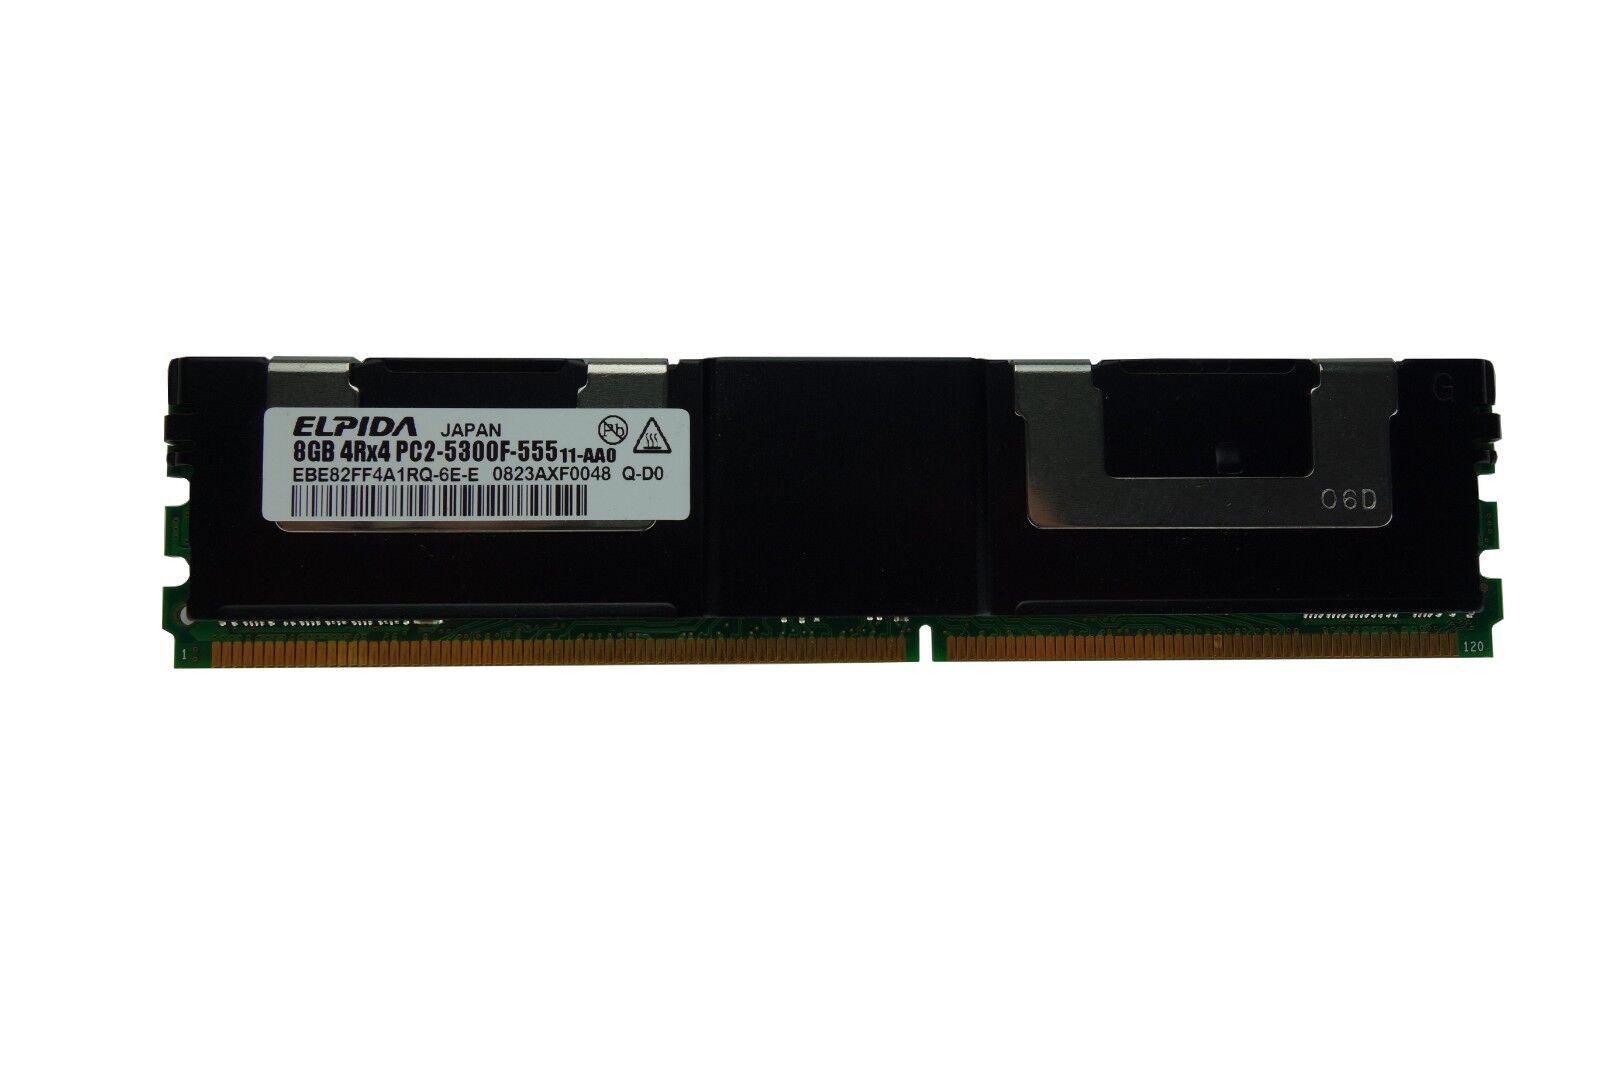 Elpida 8GB DDR2-667 PC2-5300F 4Rx4 ECC 240Pin FBDIMM EBE82FF4A1RQ-6E-E